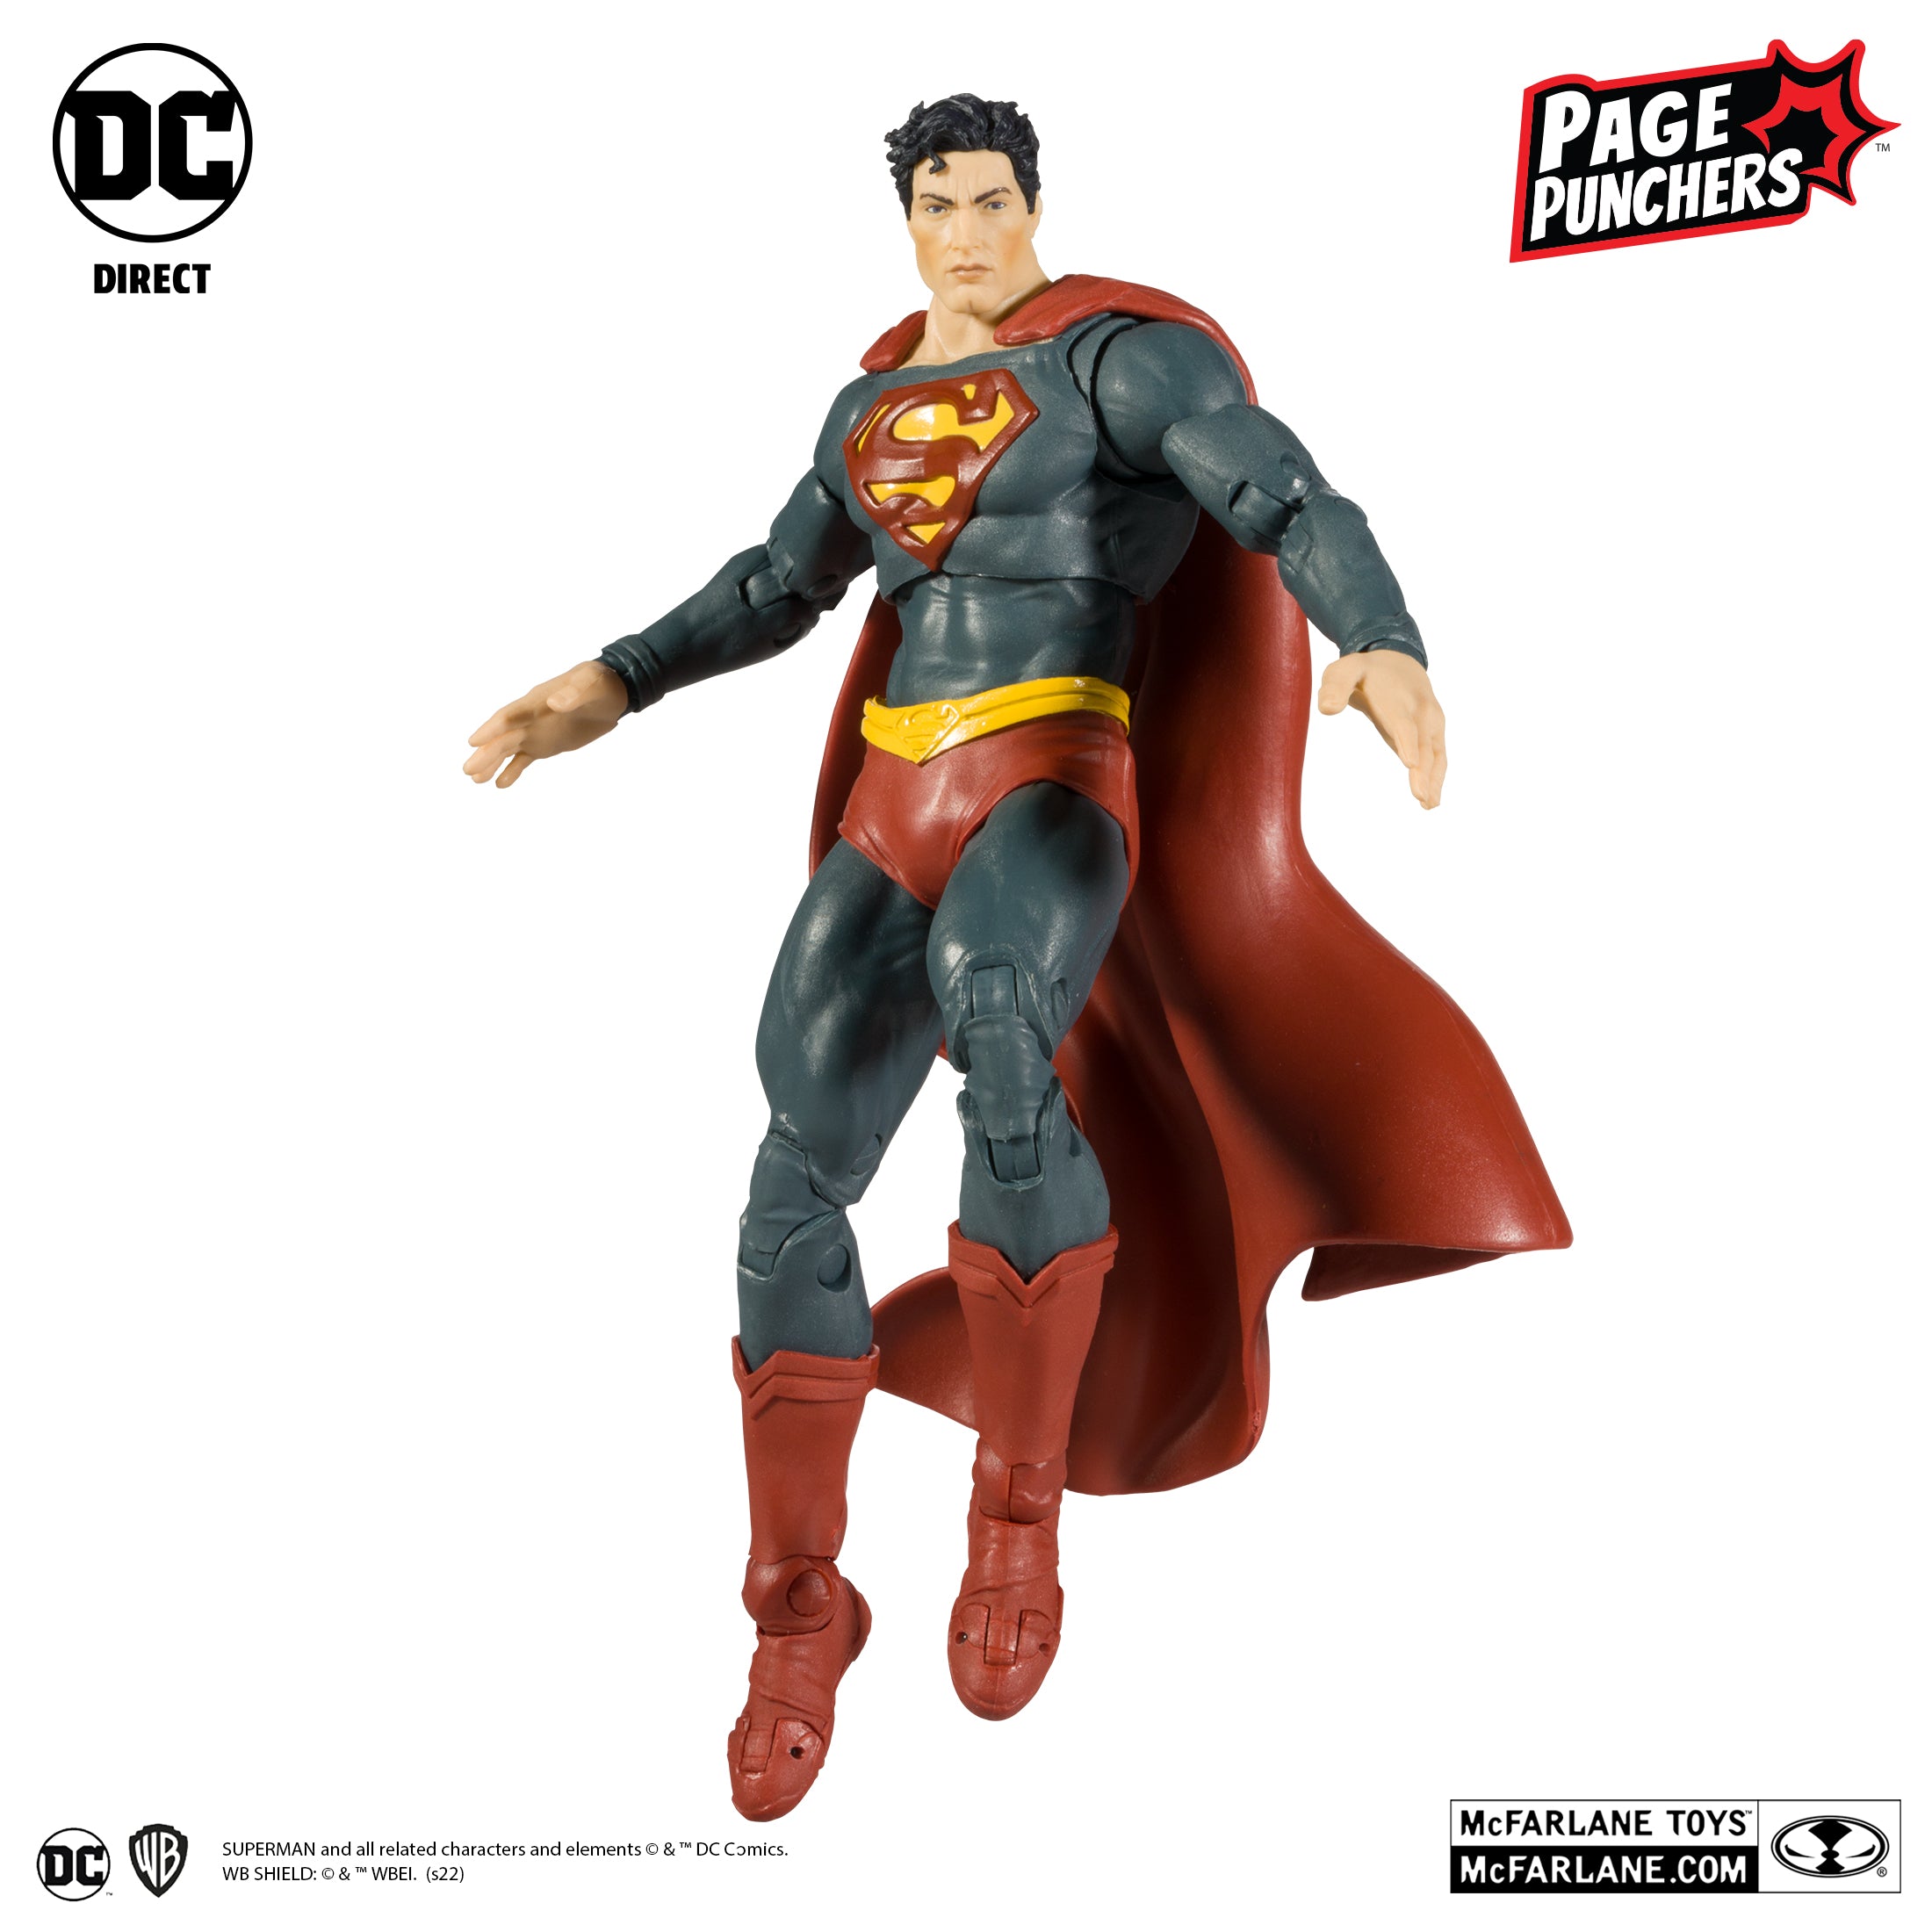 Superman w/Comic (DC Page Punchers) 7" Figure By Mcfarlane